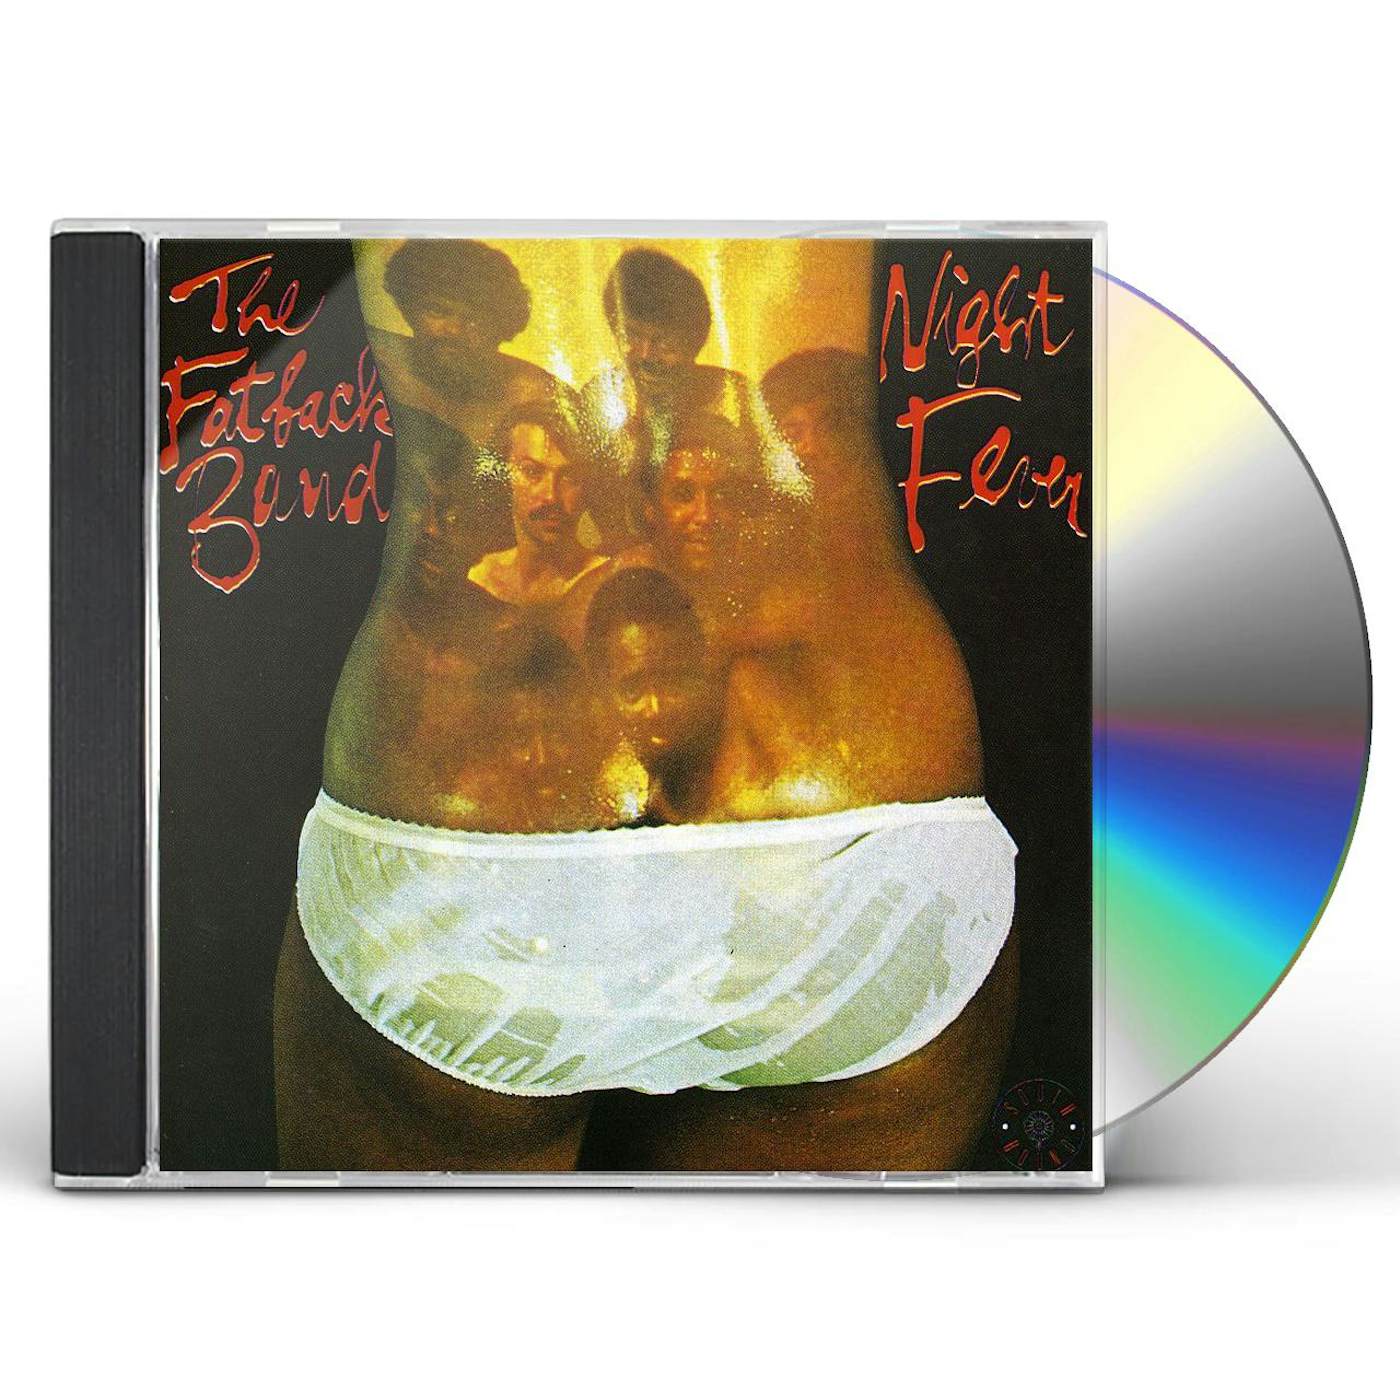 Fatback Band NIGHT FEVER CD